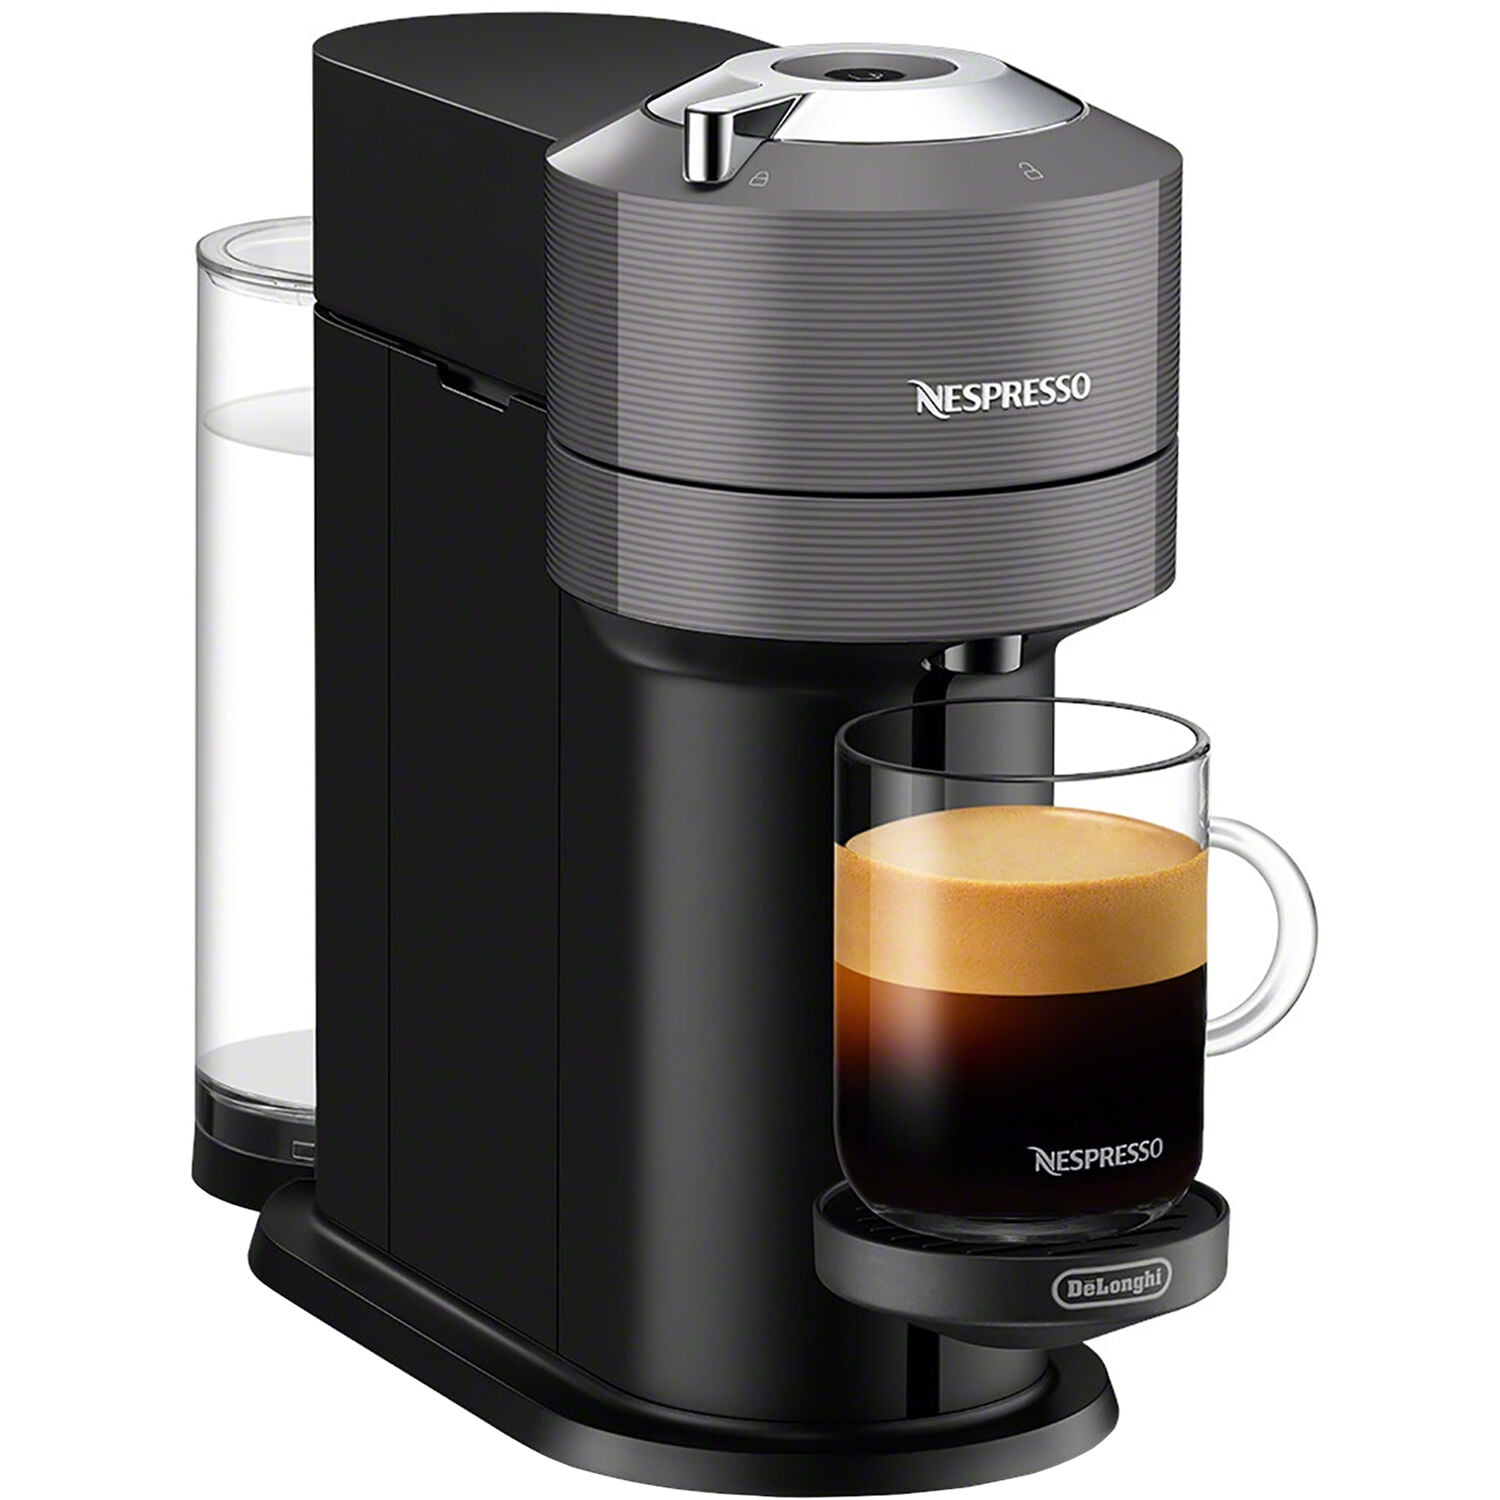 Nespresso by DeLonghi Vertuo Next Premium Coffee and Maker in Gray, ENV120GY - Walmart.com